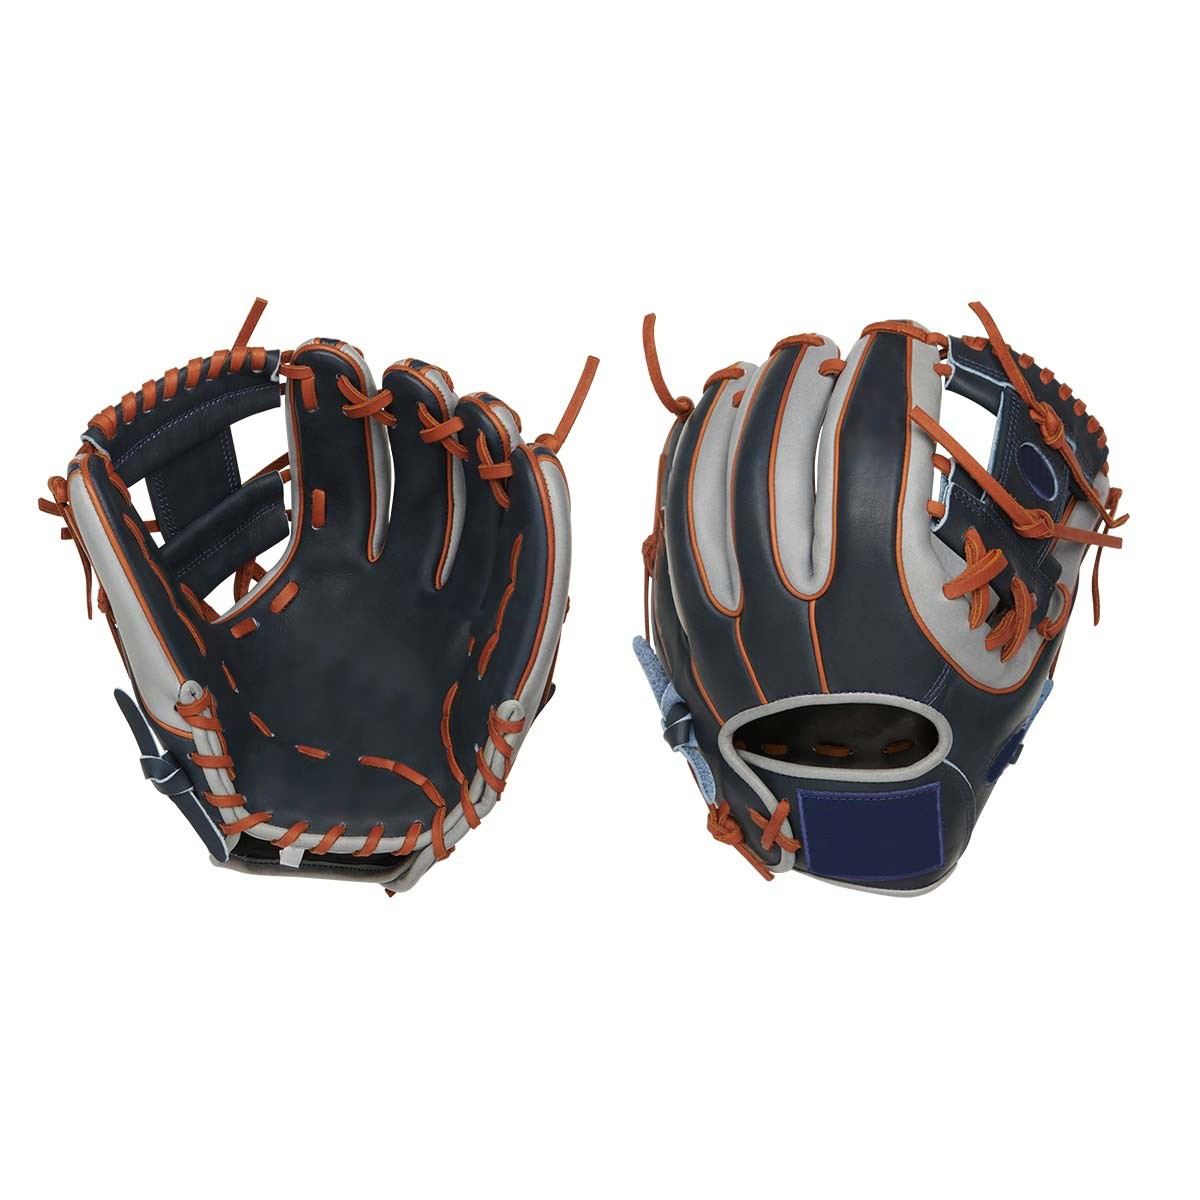 11.5" Japanese leather high abrasion performance youth baseball gloves